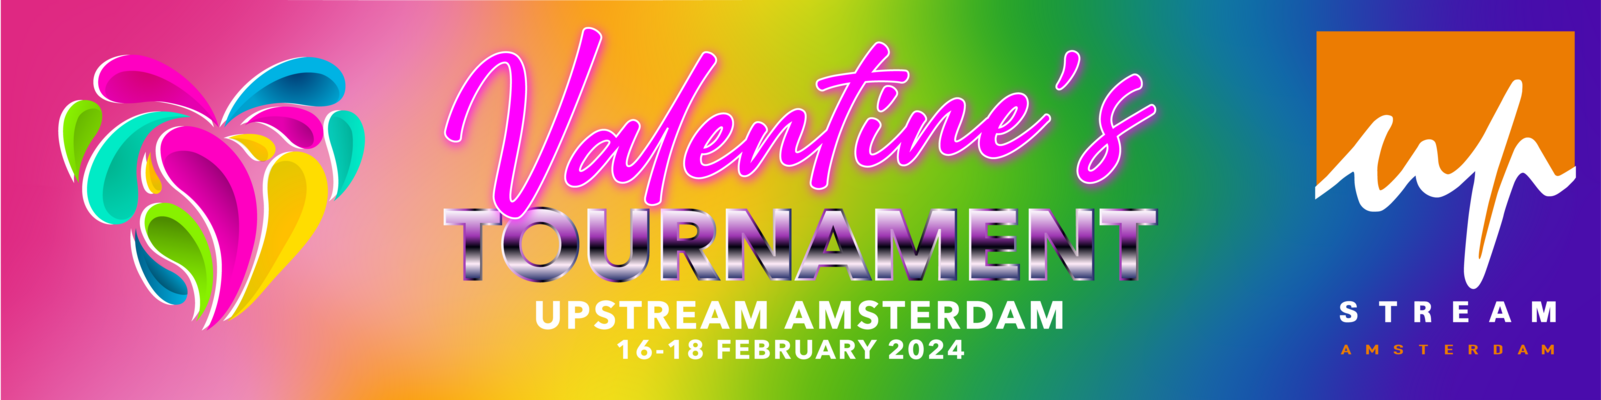 Upstream Valentine's Tournament